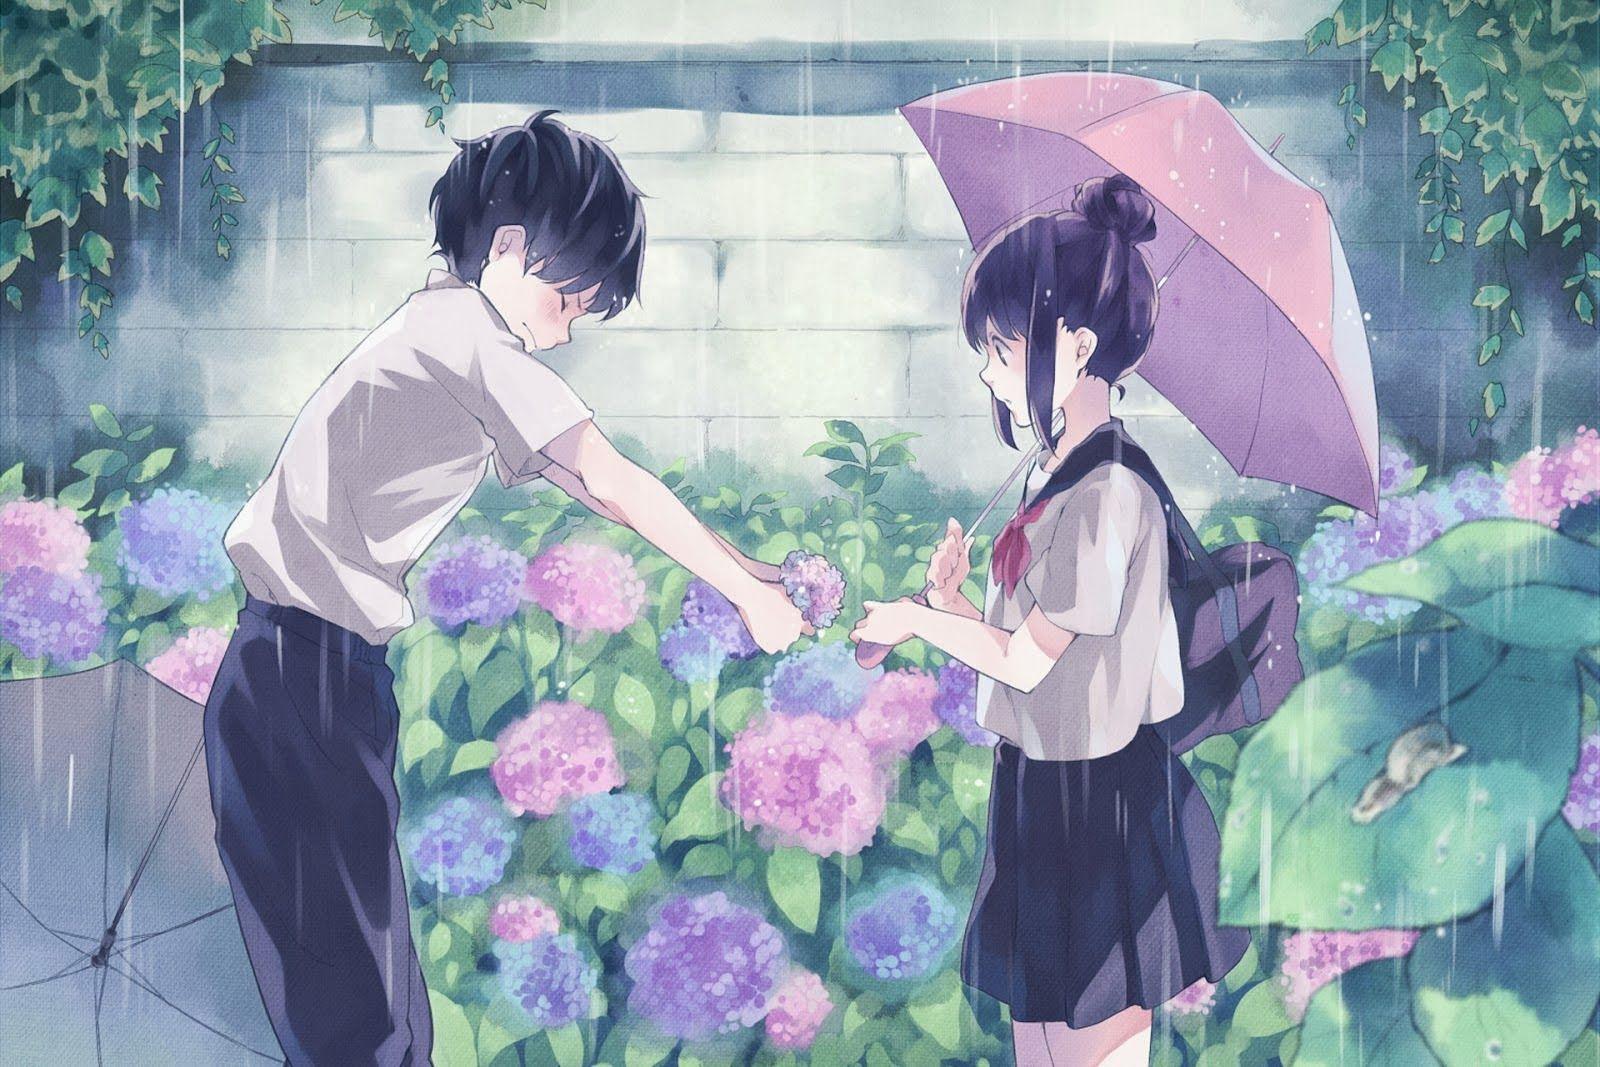 Sad Anime Girl Crying In The Rain Wallpaper. *Fantasy